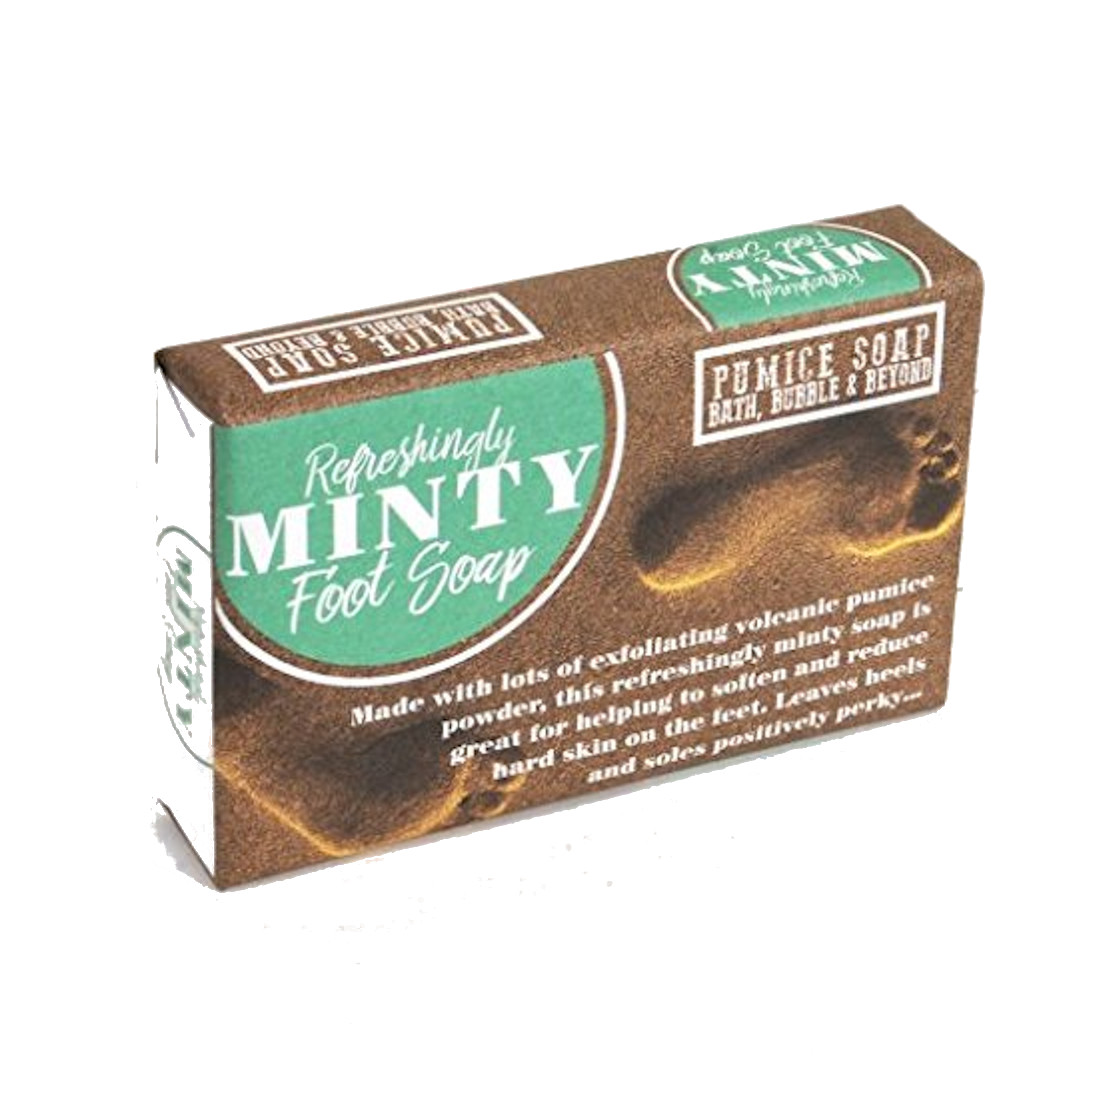 Beyond Mint Sourcery Shampoo Bar 
Beyond Refreshing Minty Foot Pumice Soap
xtclocal.com/shop/bubbles-a…
#xtclocal #bathbubbleandbeyond #mintyfresh #mintbath #mintwash #shampoobar #footsoap #feelingfresh